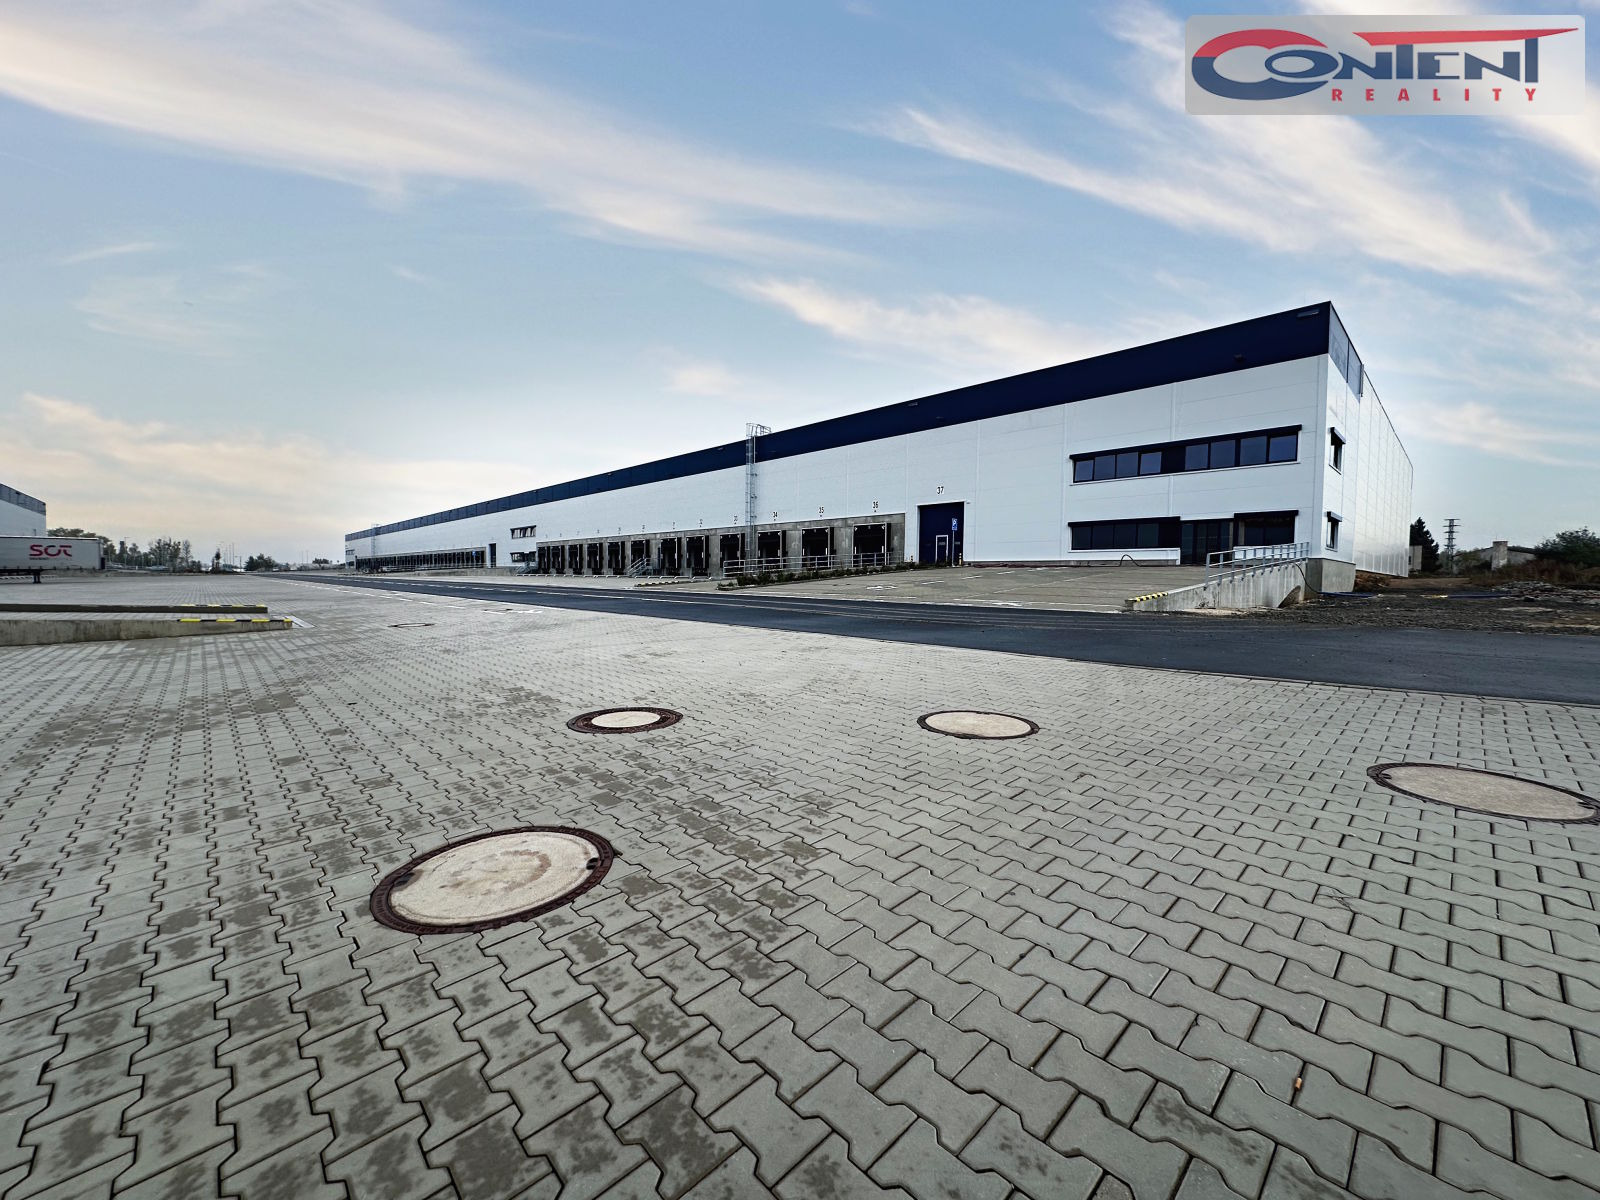 Pronájem novostavby skladu, výrobních prostor 20.000 m², Ostrava - Mošnov